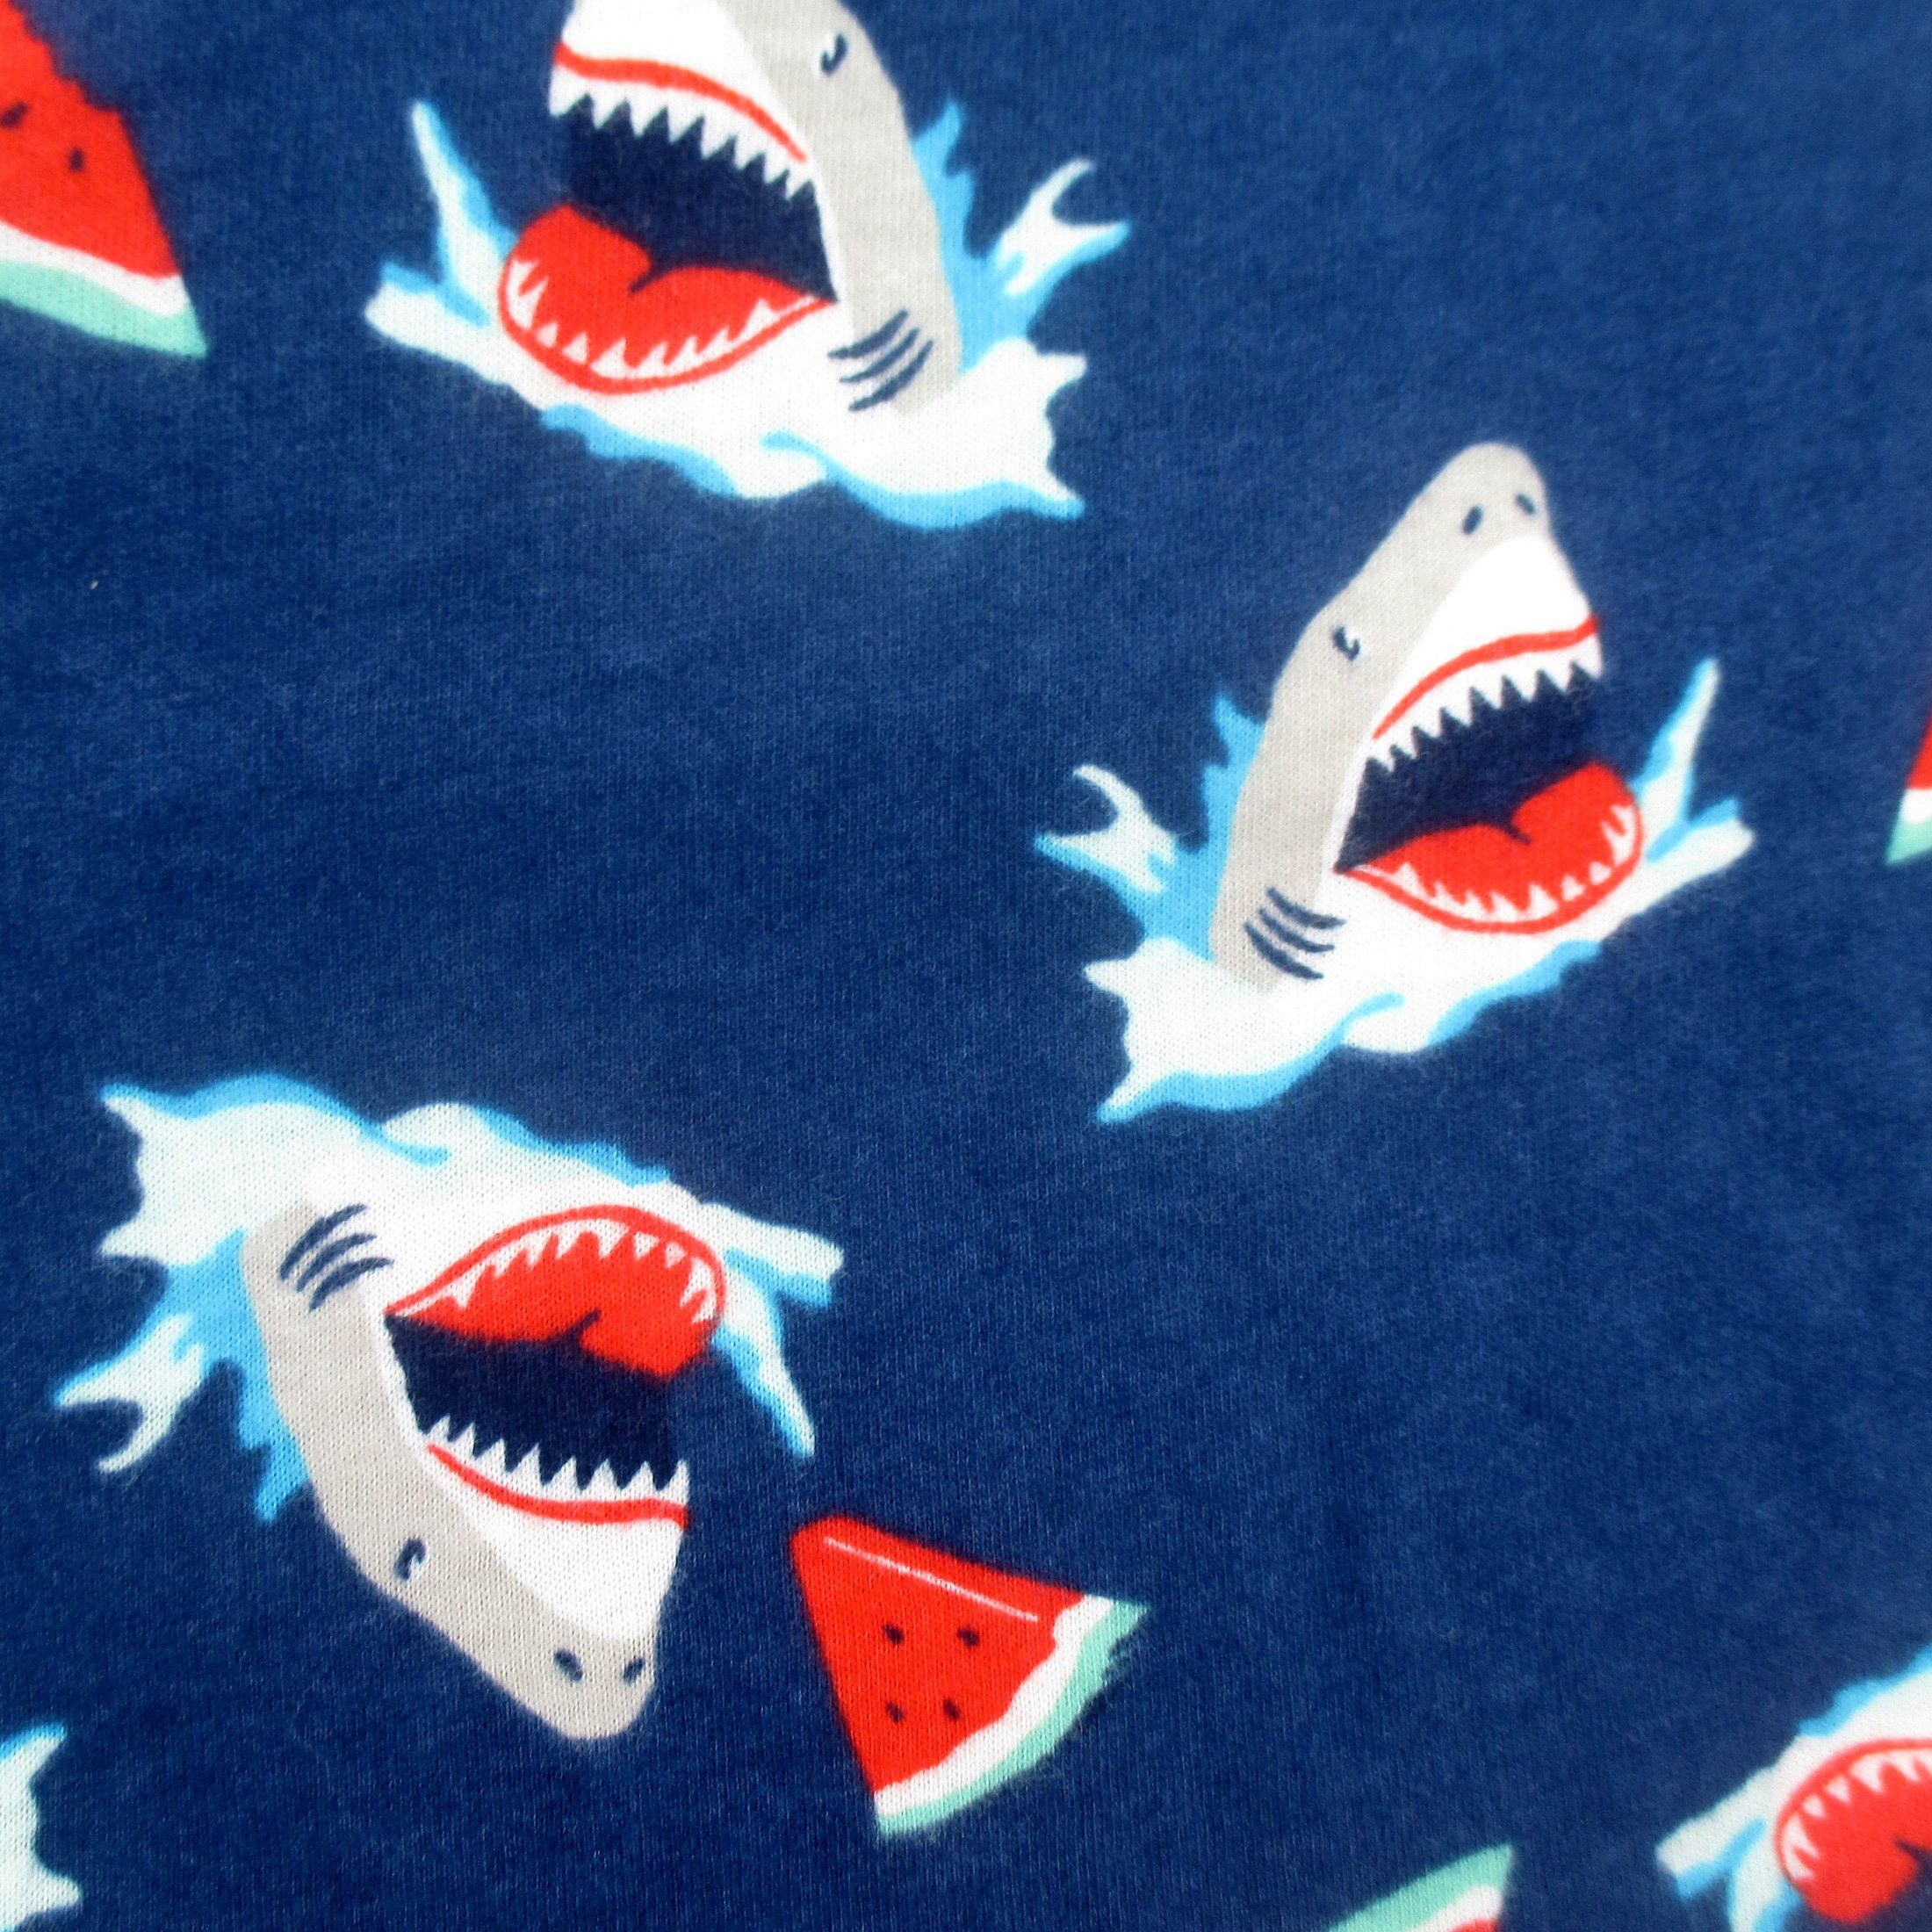 Rock Atoll Mens Great White Shark Eating Watermelon Print Boxer Shorts Knit T-Shirt Fabric